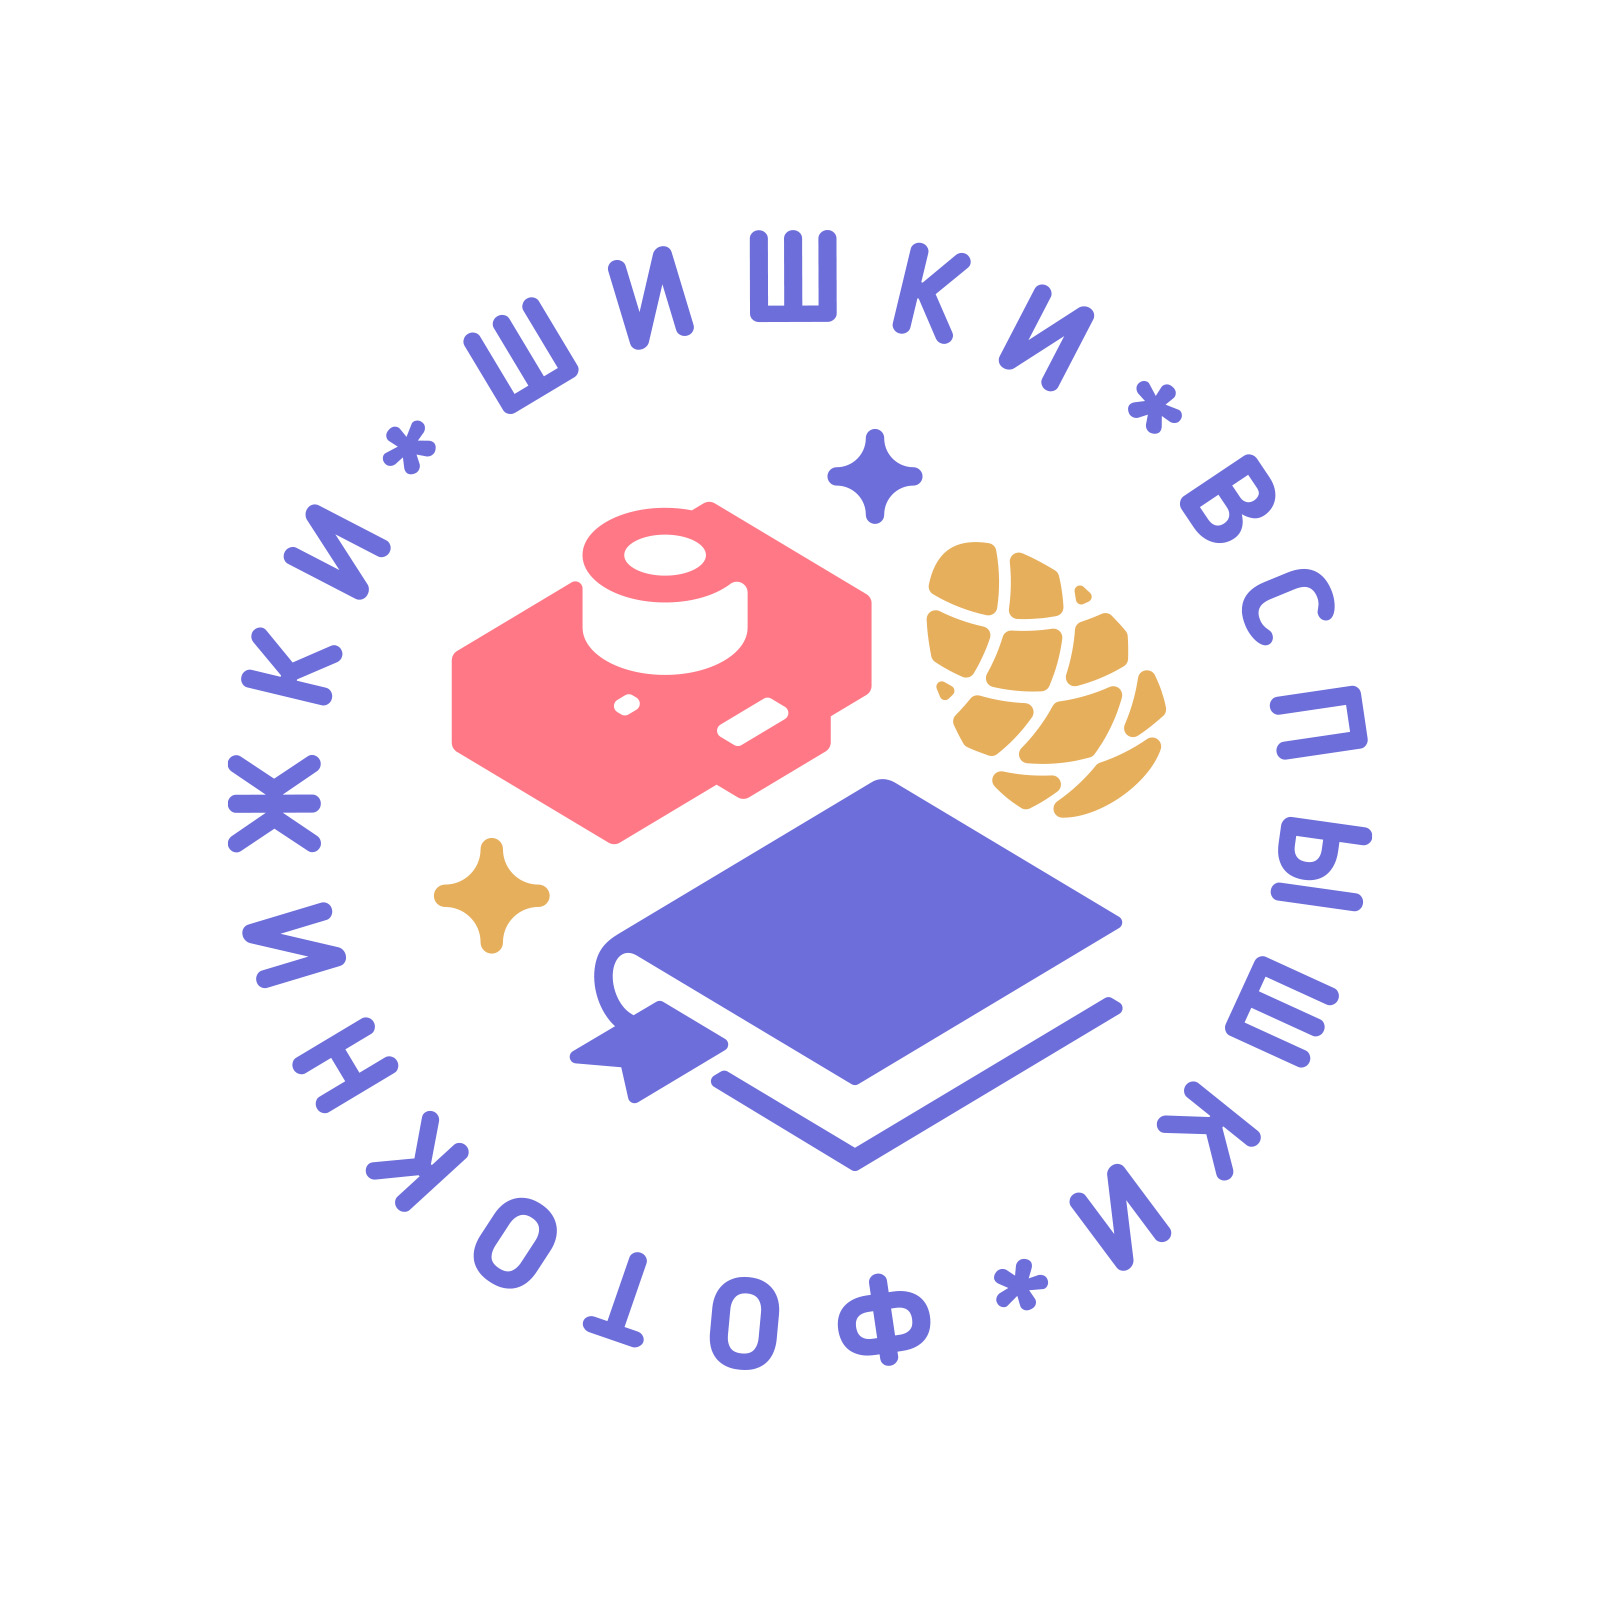 Shshki-Vspyshki-Photokinzhki logo design by logo designer Stanislav+Regis for your inspiration and for the worlds largest logo competition